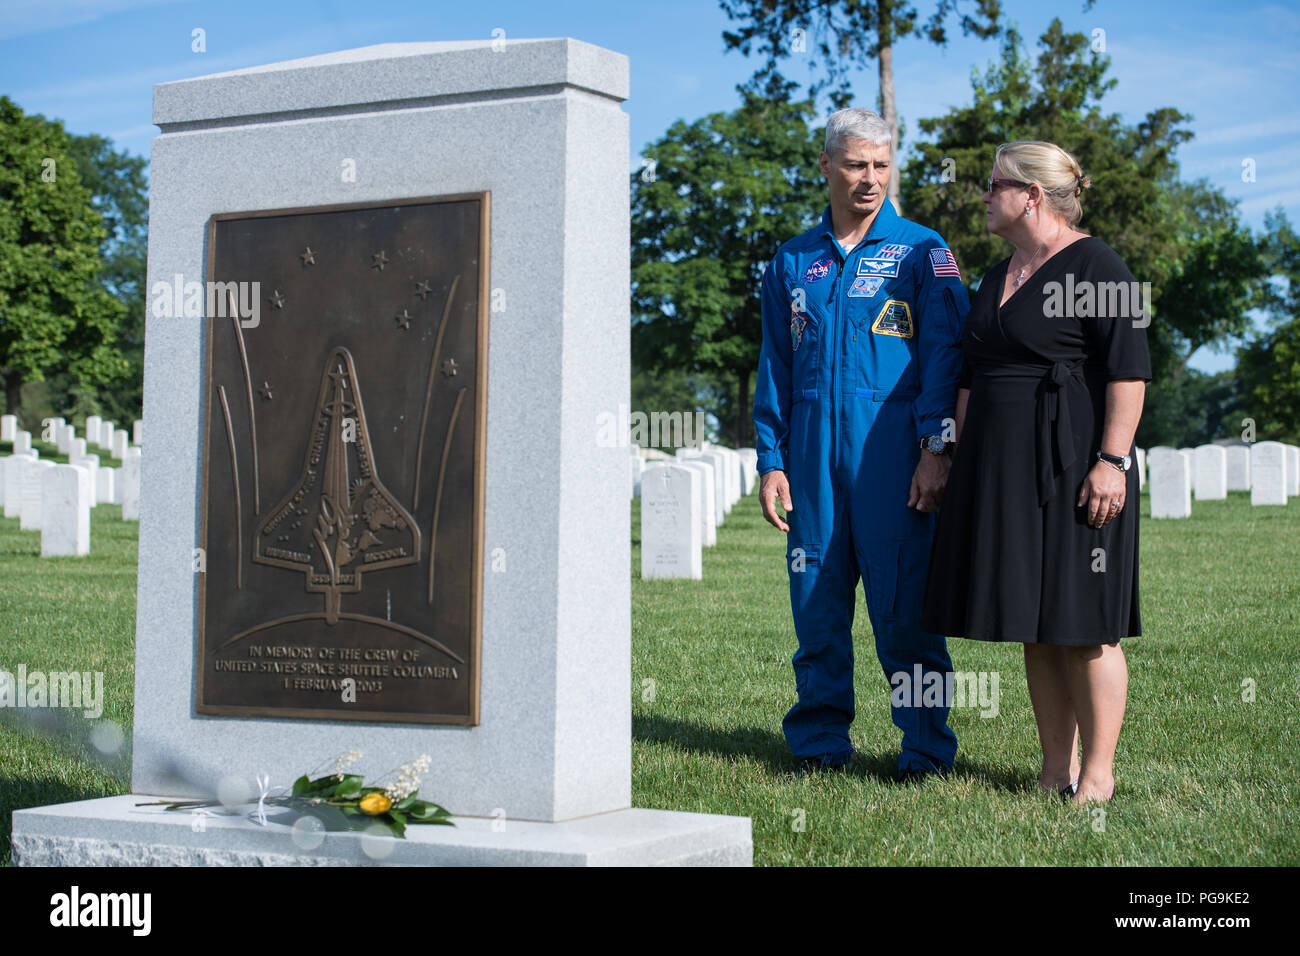 NASA astronaut Mark Vande Hei, left, and his wife Julie visit the Space Shuttle Columbia memorial, Friday, June 15, 2018 at Arlington National Cemetery in Arlington, Va. Stock Photo